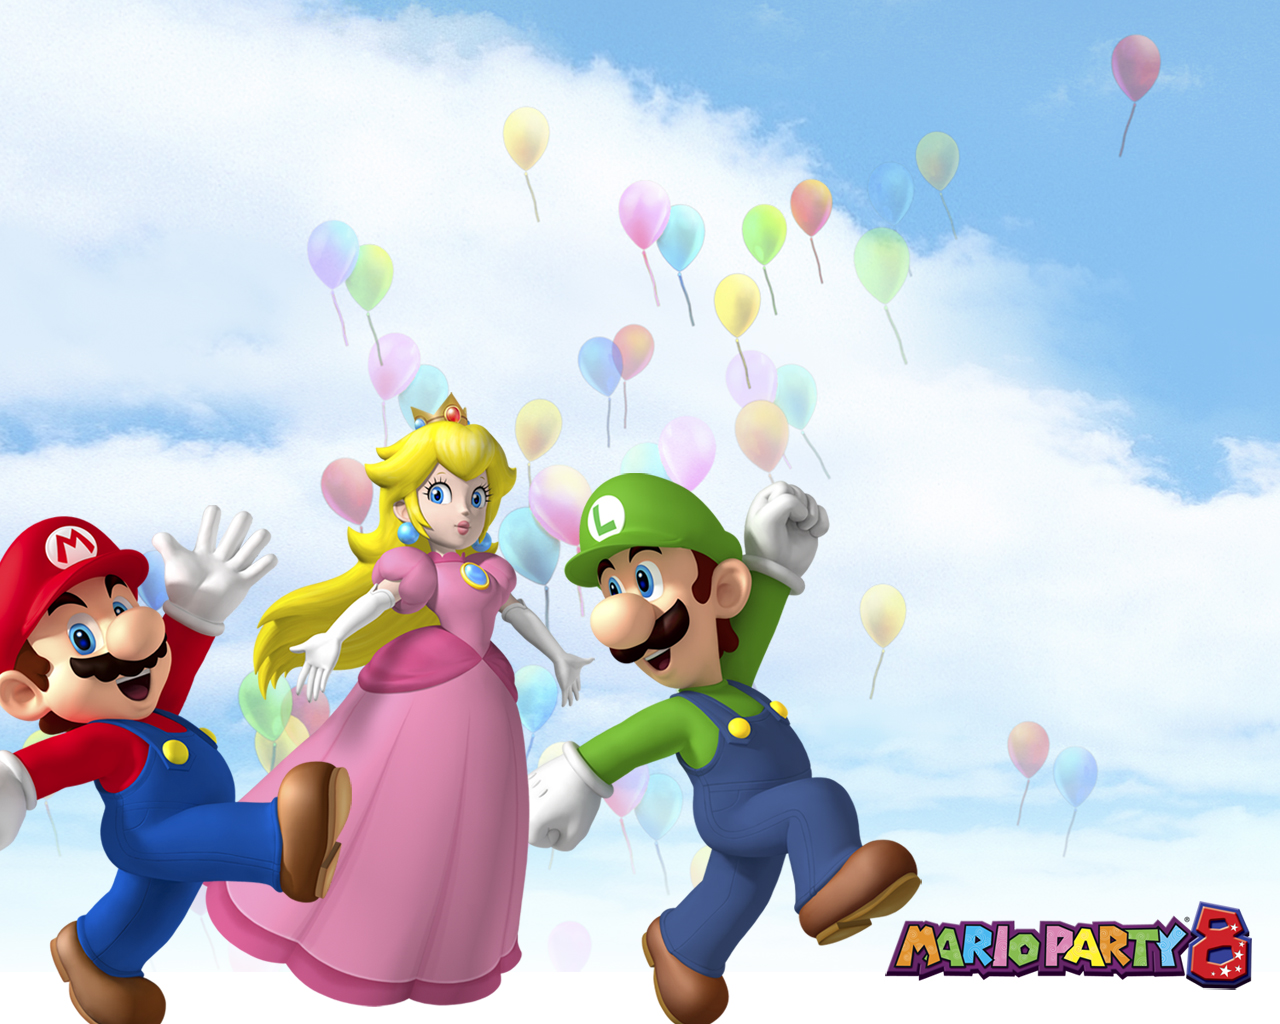 luigi, mario, video game, princess peach, mario party 8